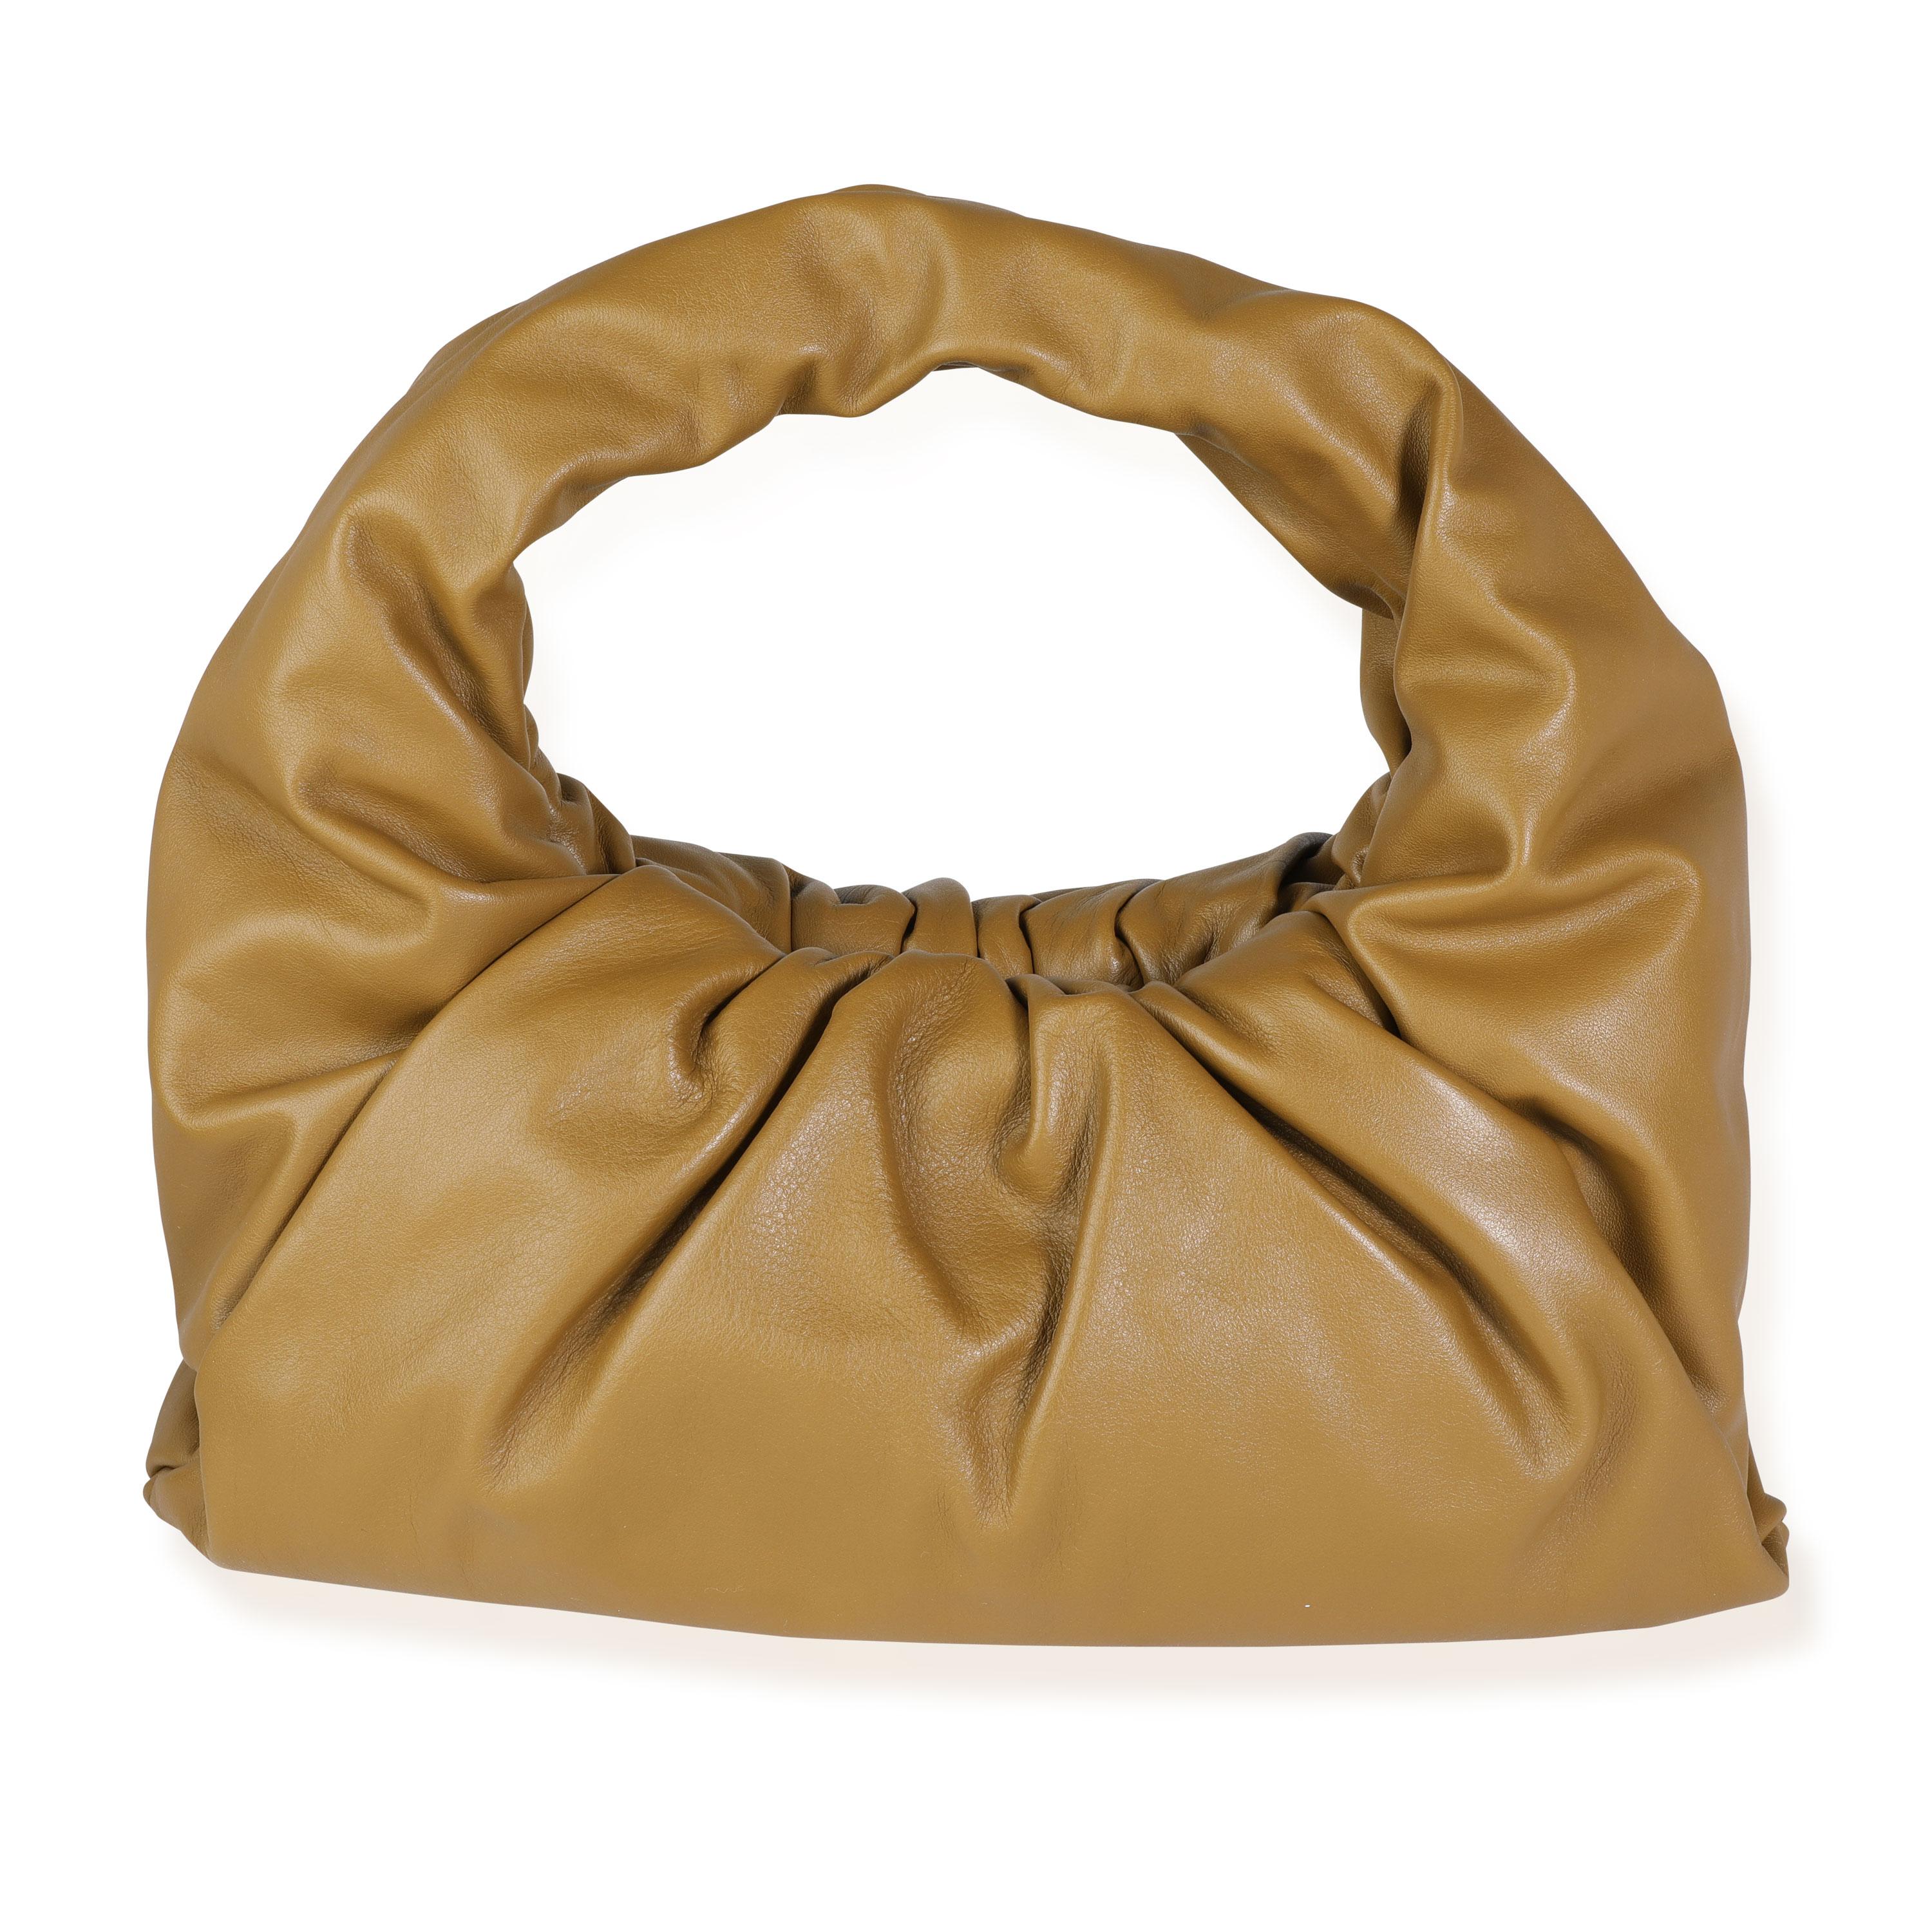 Listing Title: Bottega Veneta Teak Calfskin Leather Shoulder Pouch Bag
SKU: 115931
MSRP: 2800.00
Condition: Pre-owned (3000)
Condition Description: The Bottega Veneta Calfskin Leather Shoulder Pouch Bag, here in Teak Brown, is the perfect bag for